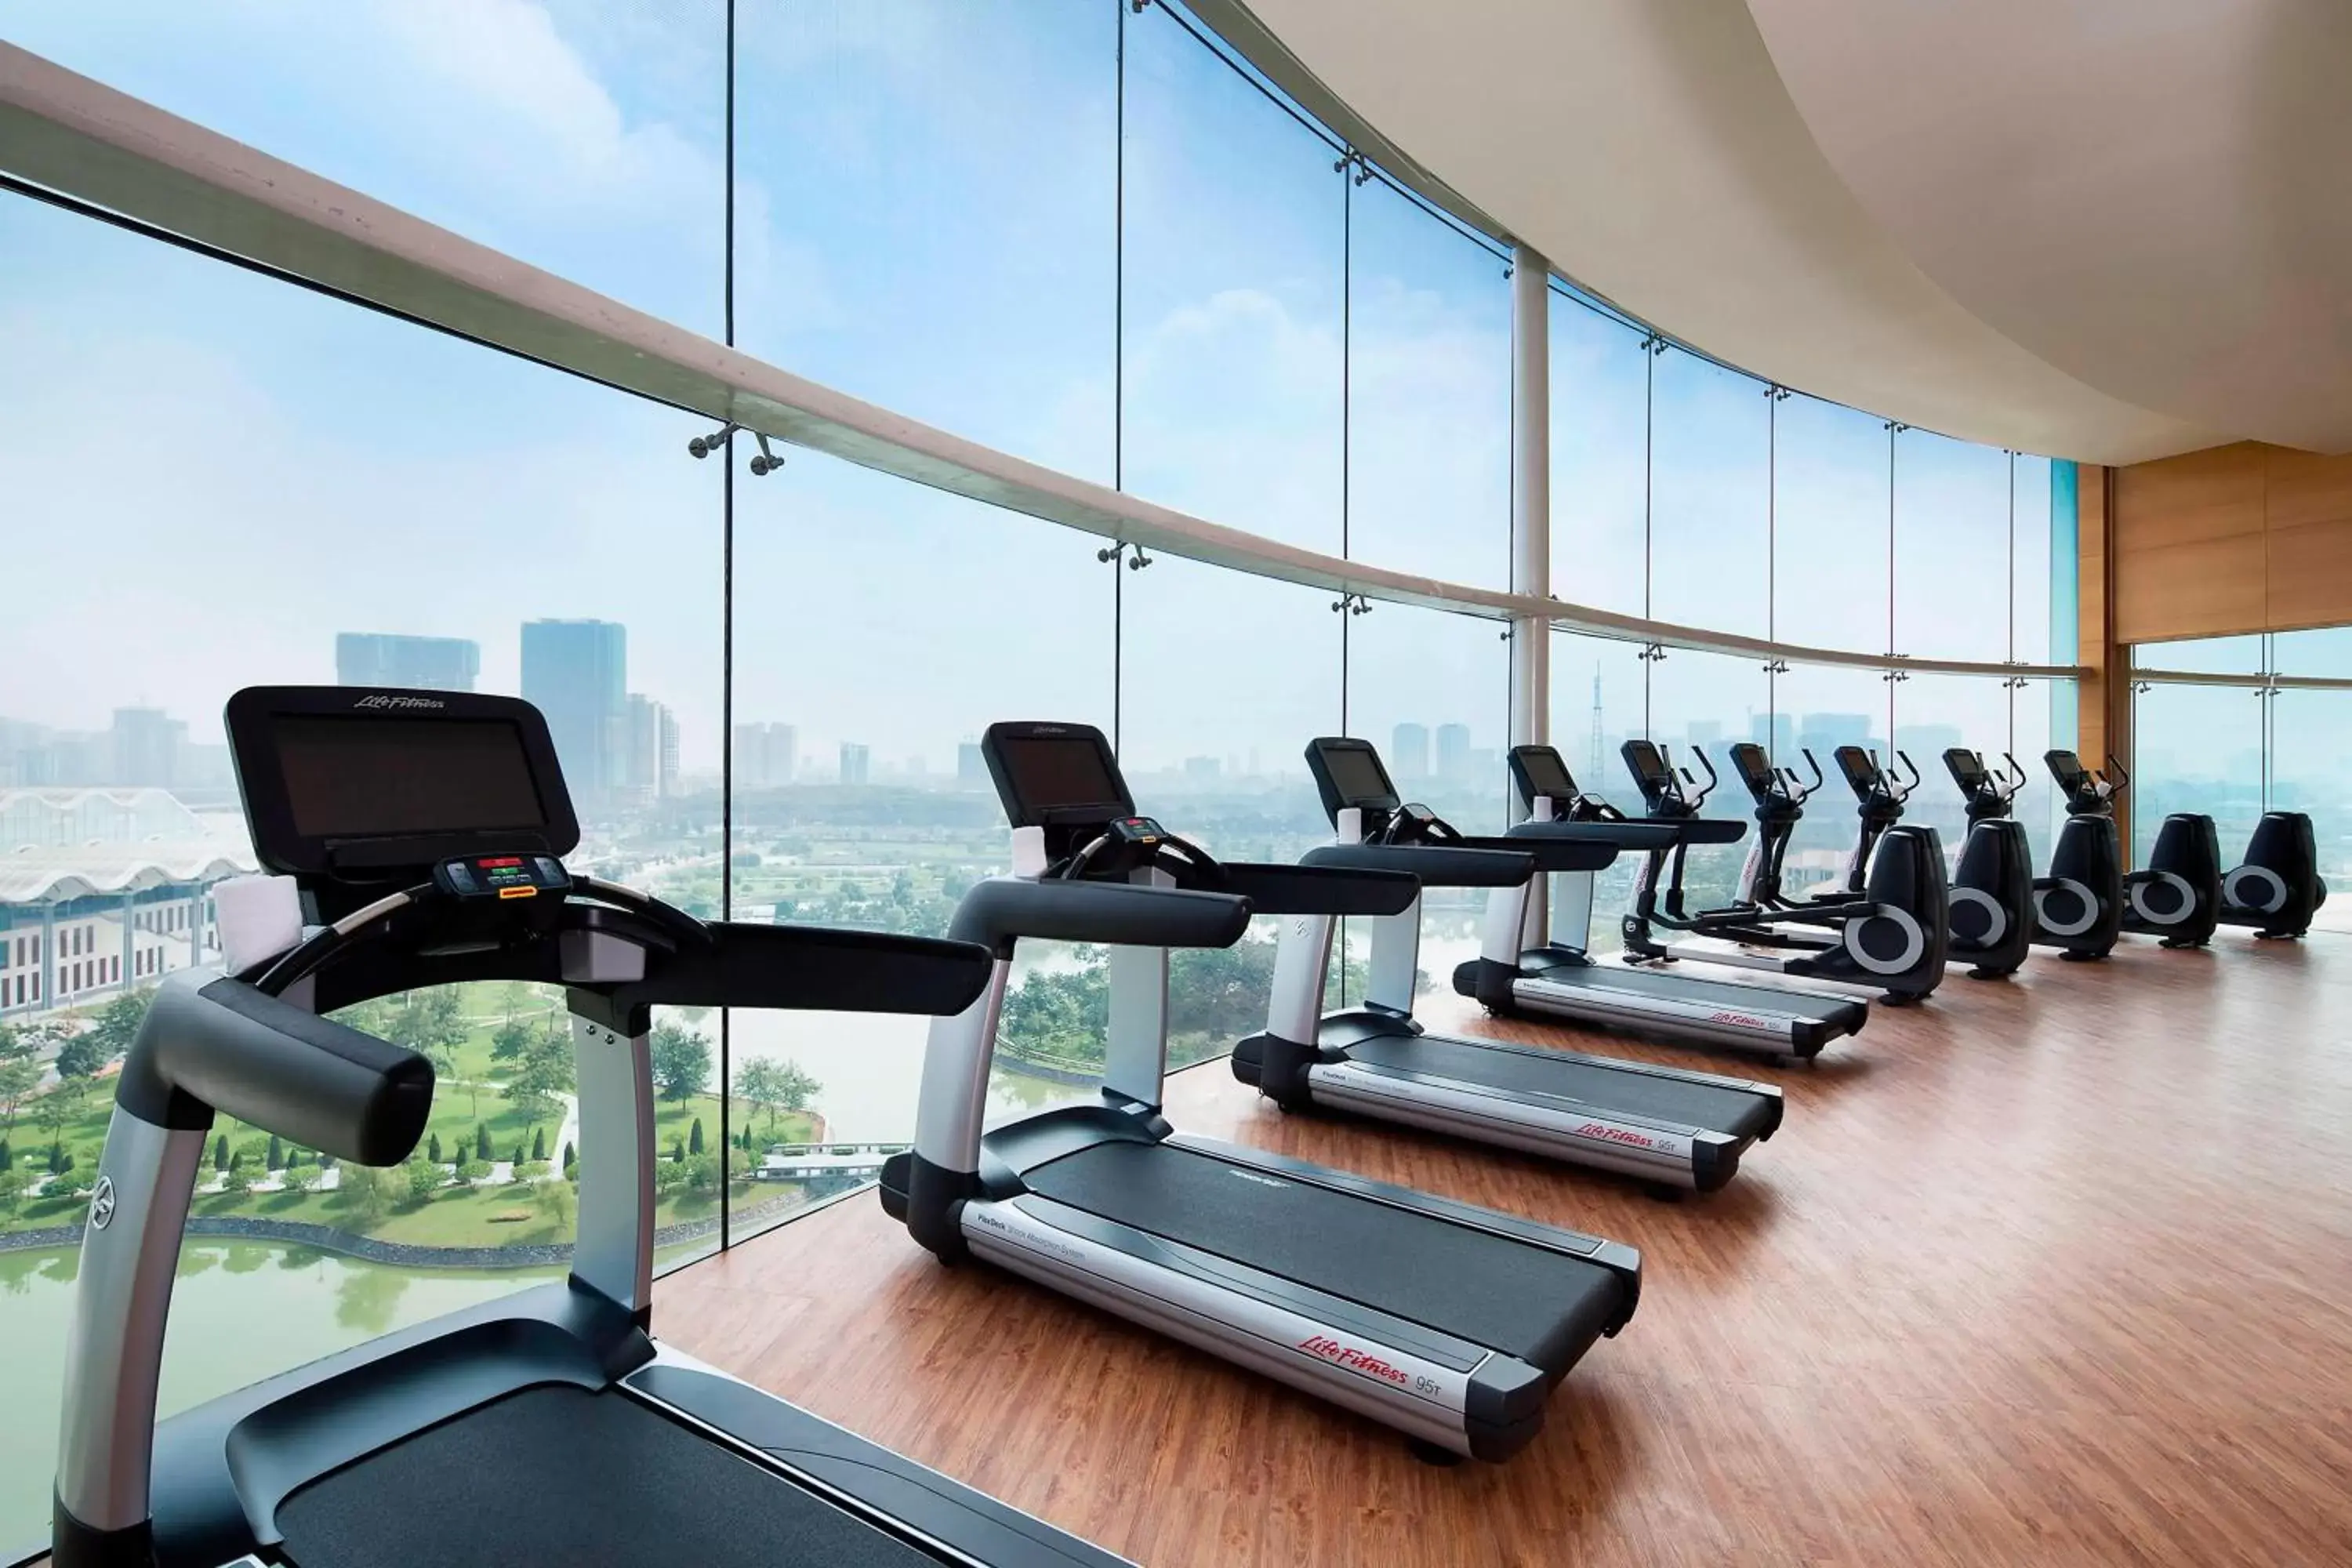 Fitness centre/facilities, Fitness Center/Facilities in JW Marriott Hotel Hanoi